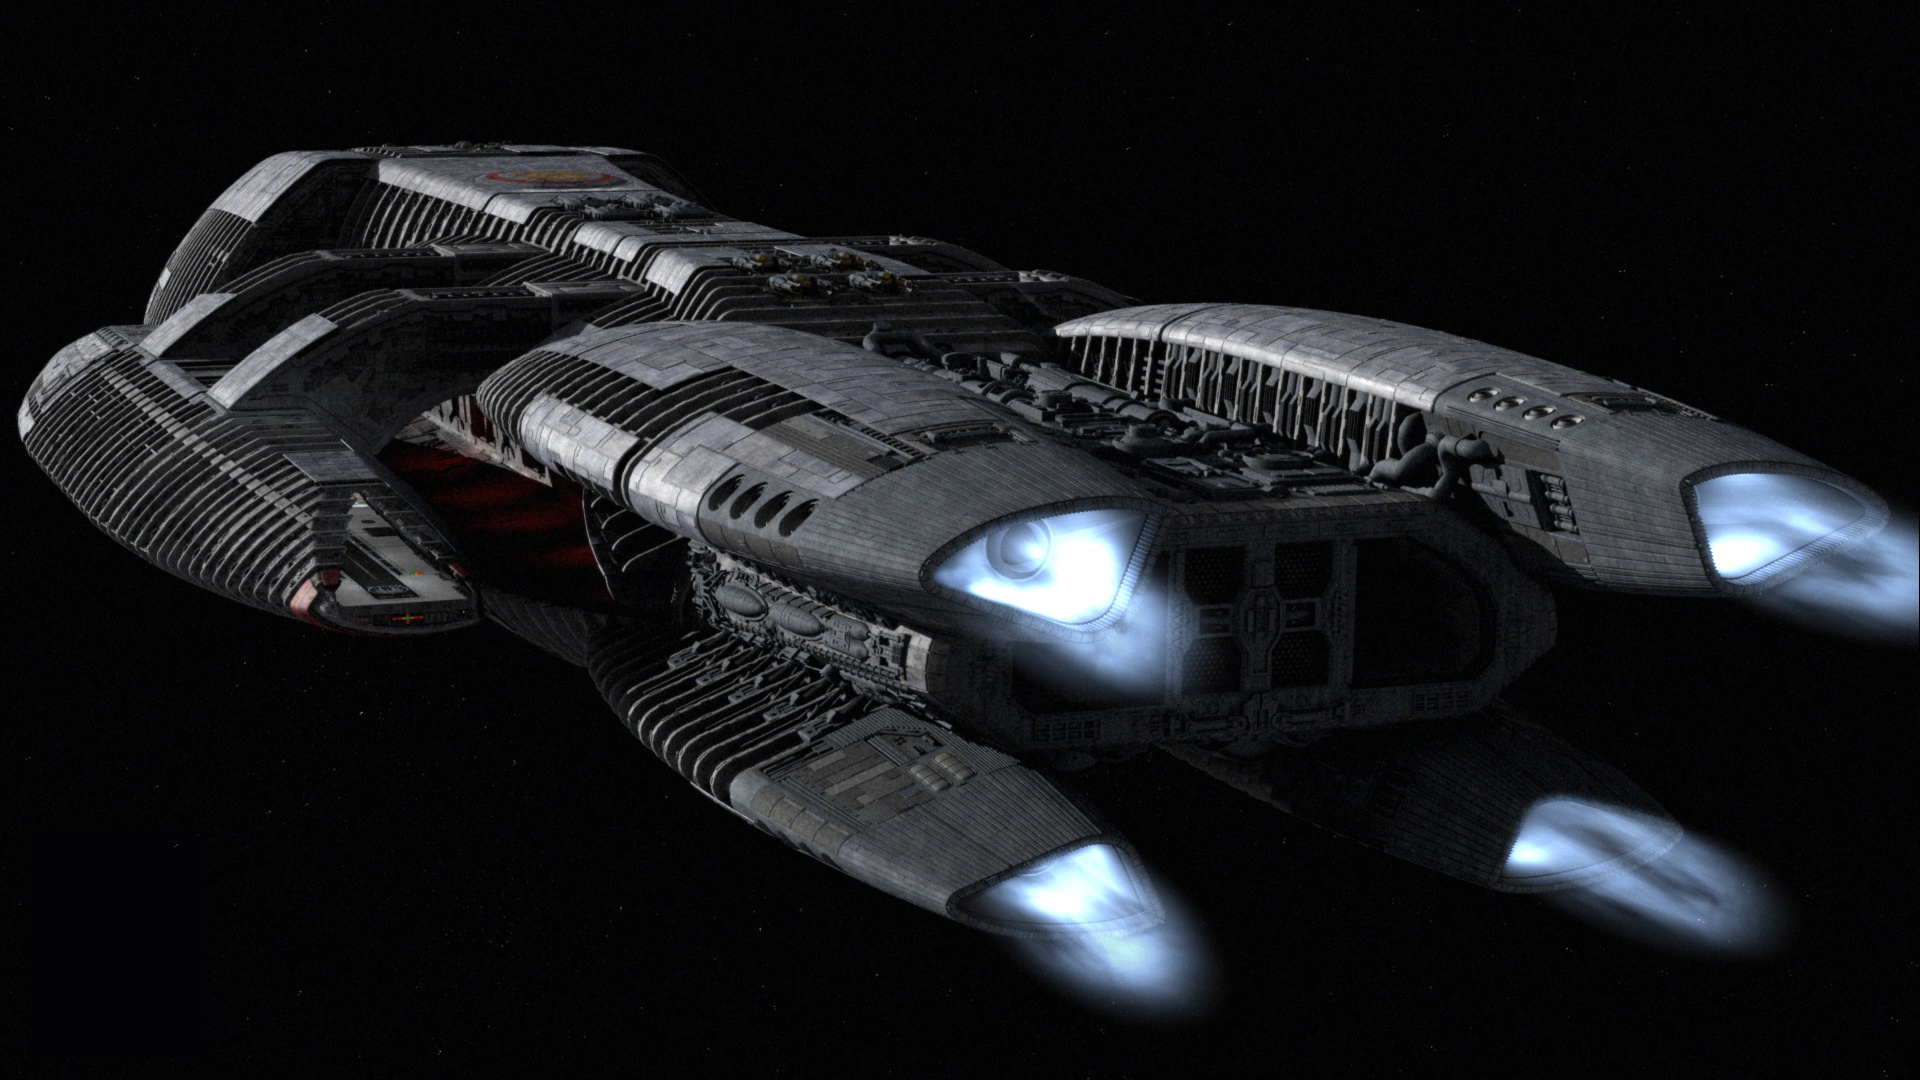 General 1920x1080 Battlestar Galactica digital art spaceship science fiction TV series vehicle